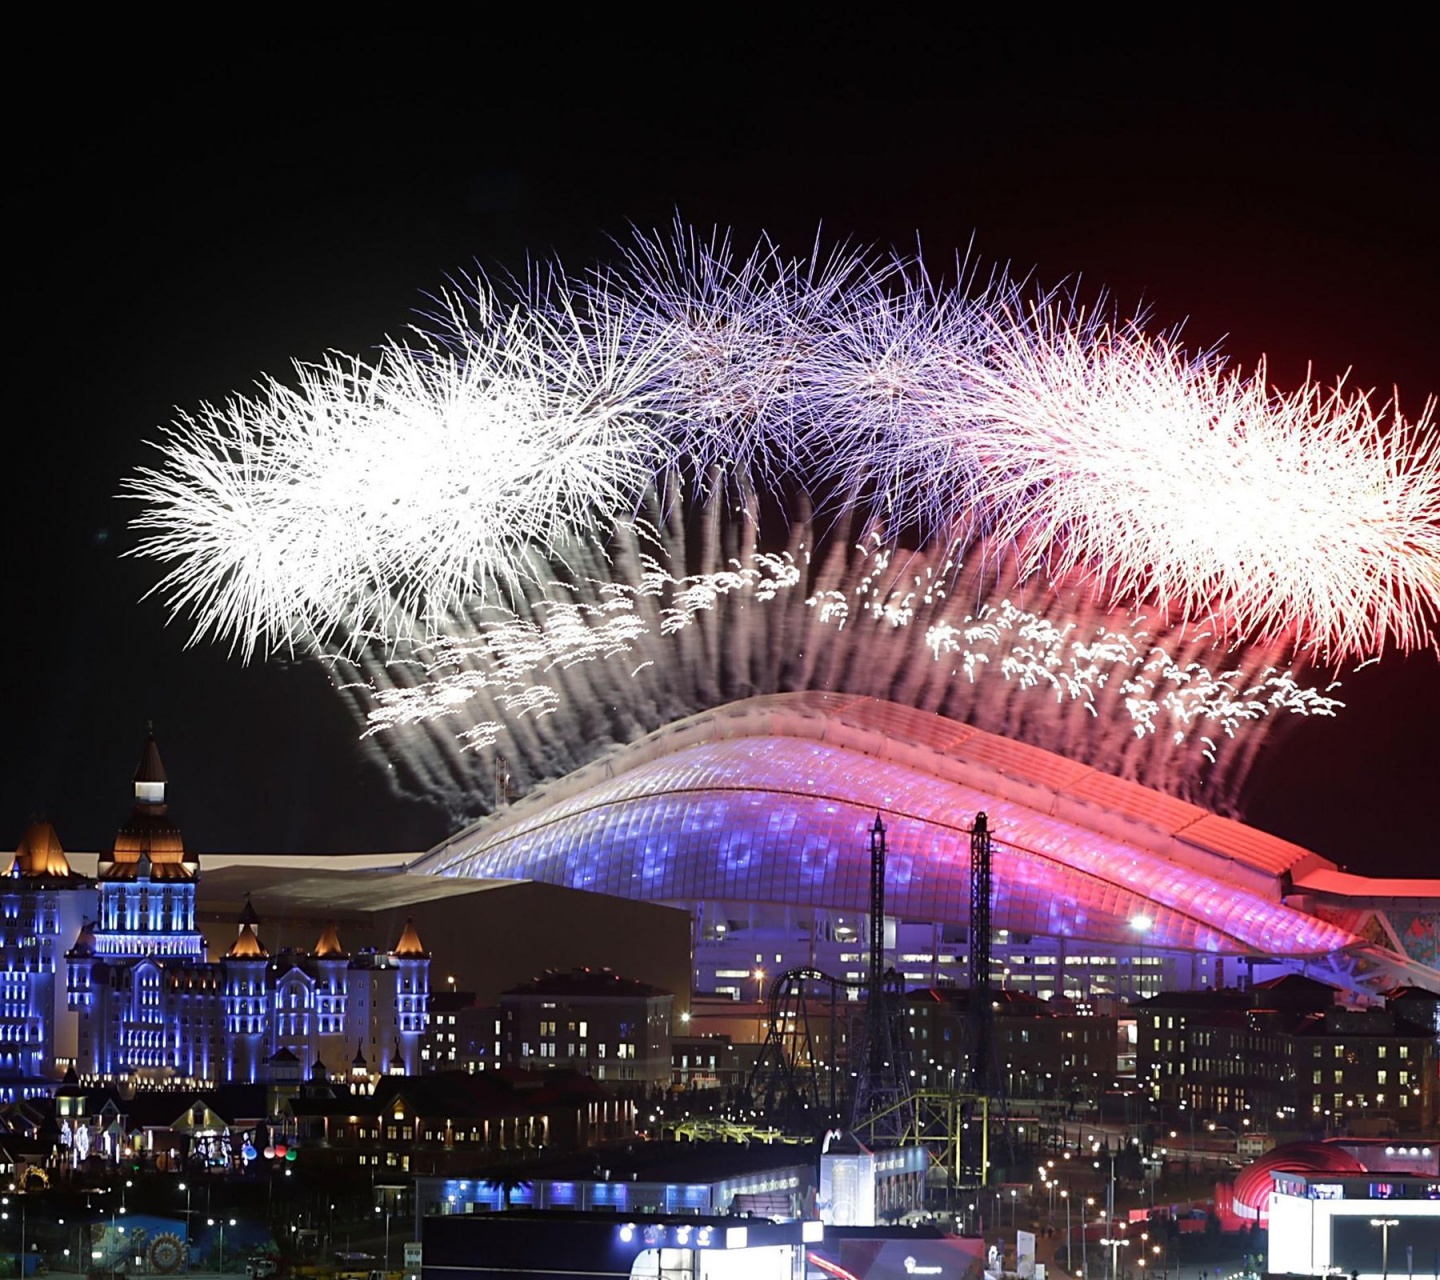 Winter Olympics Sochi 2014 Fireworks